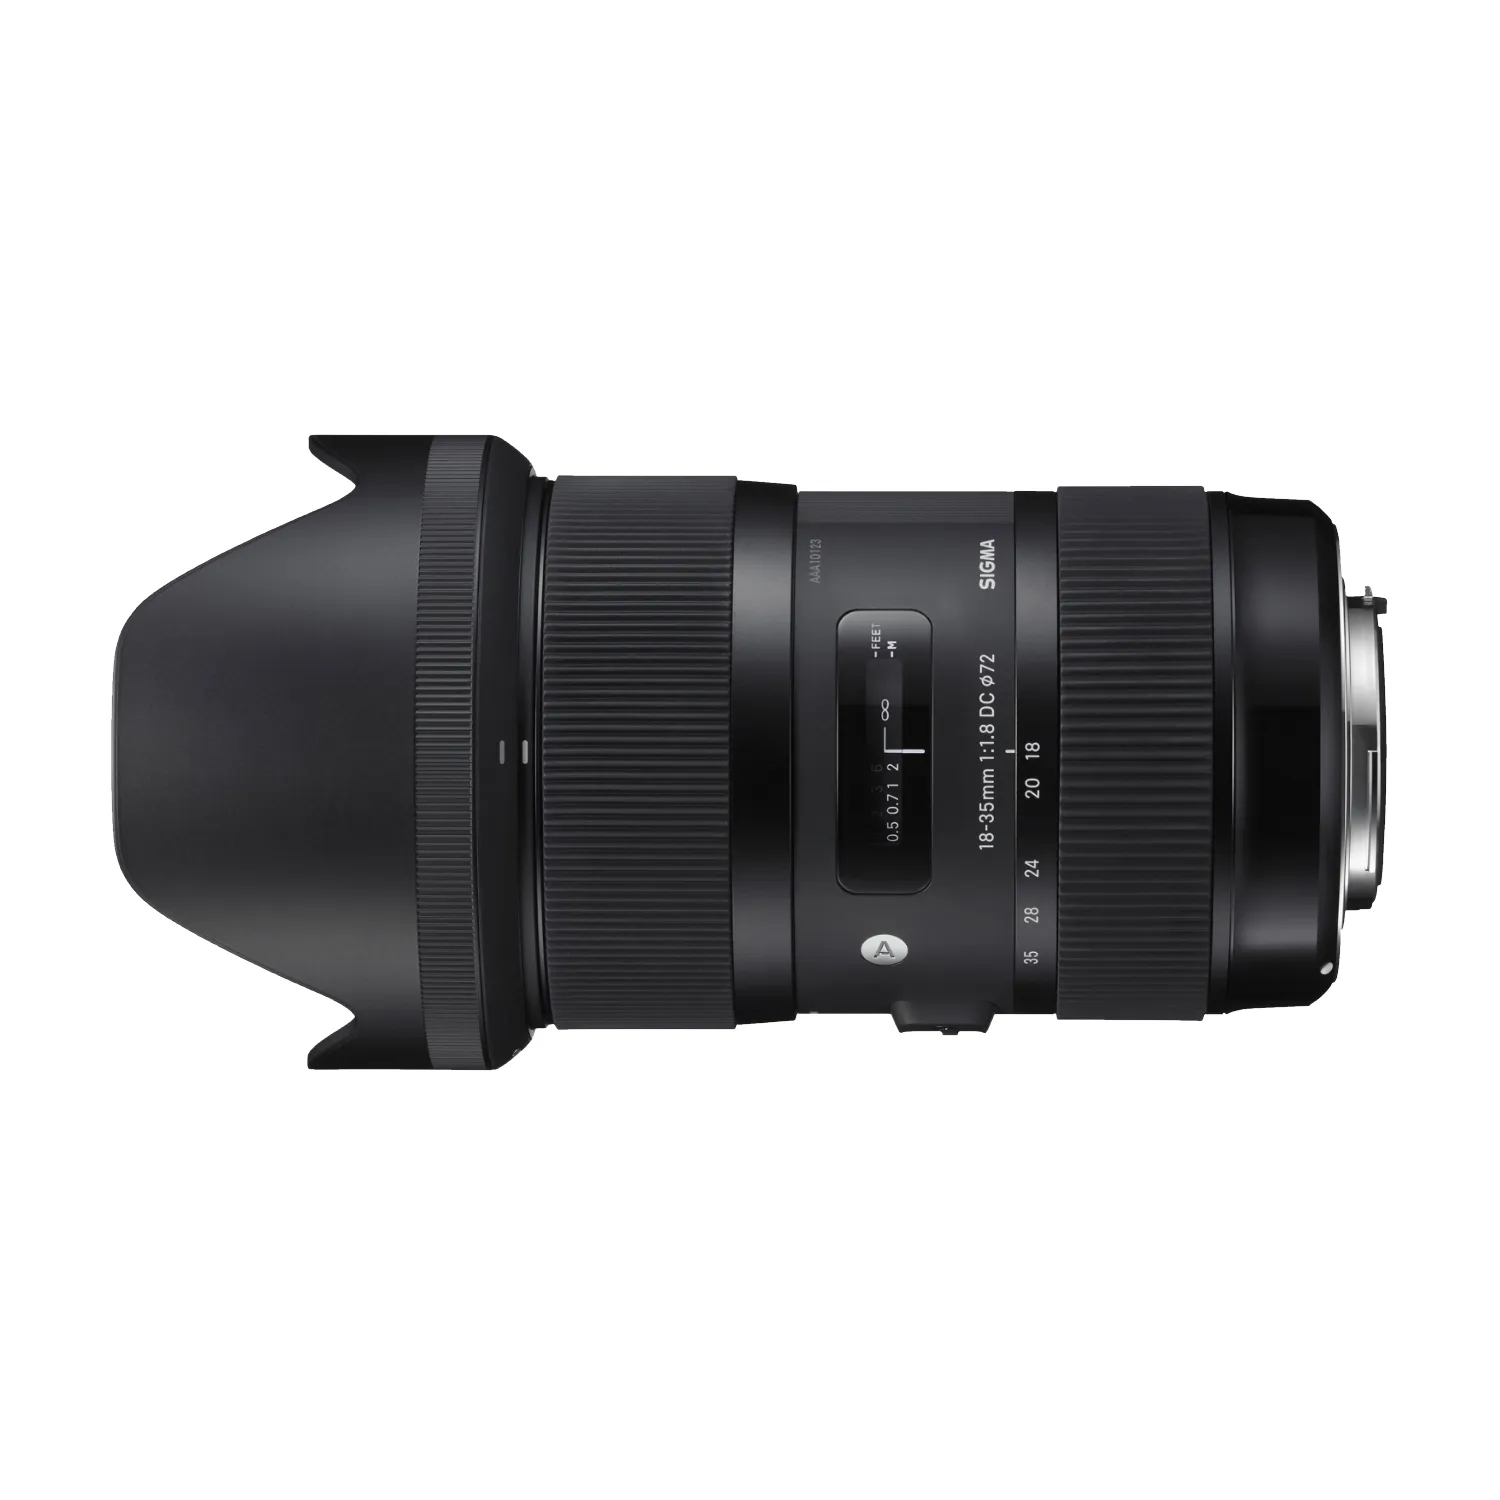 Sigma 18-35mm f/1.8 DC HSM Art Lens